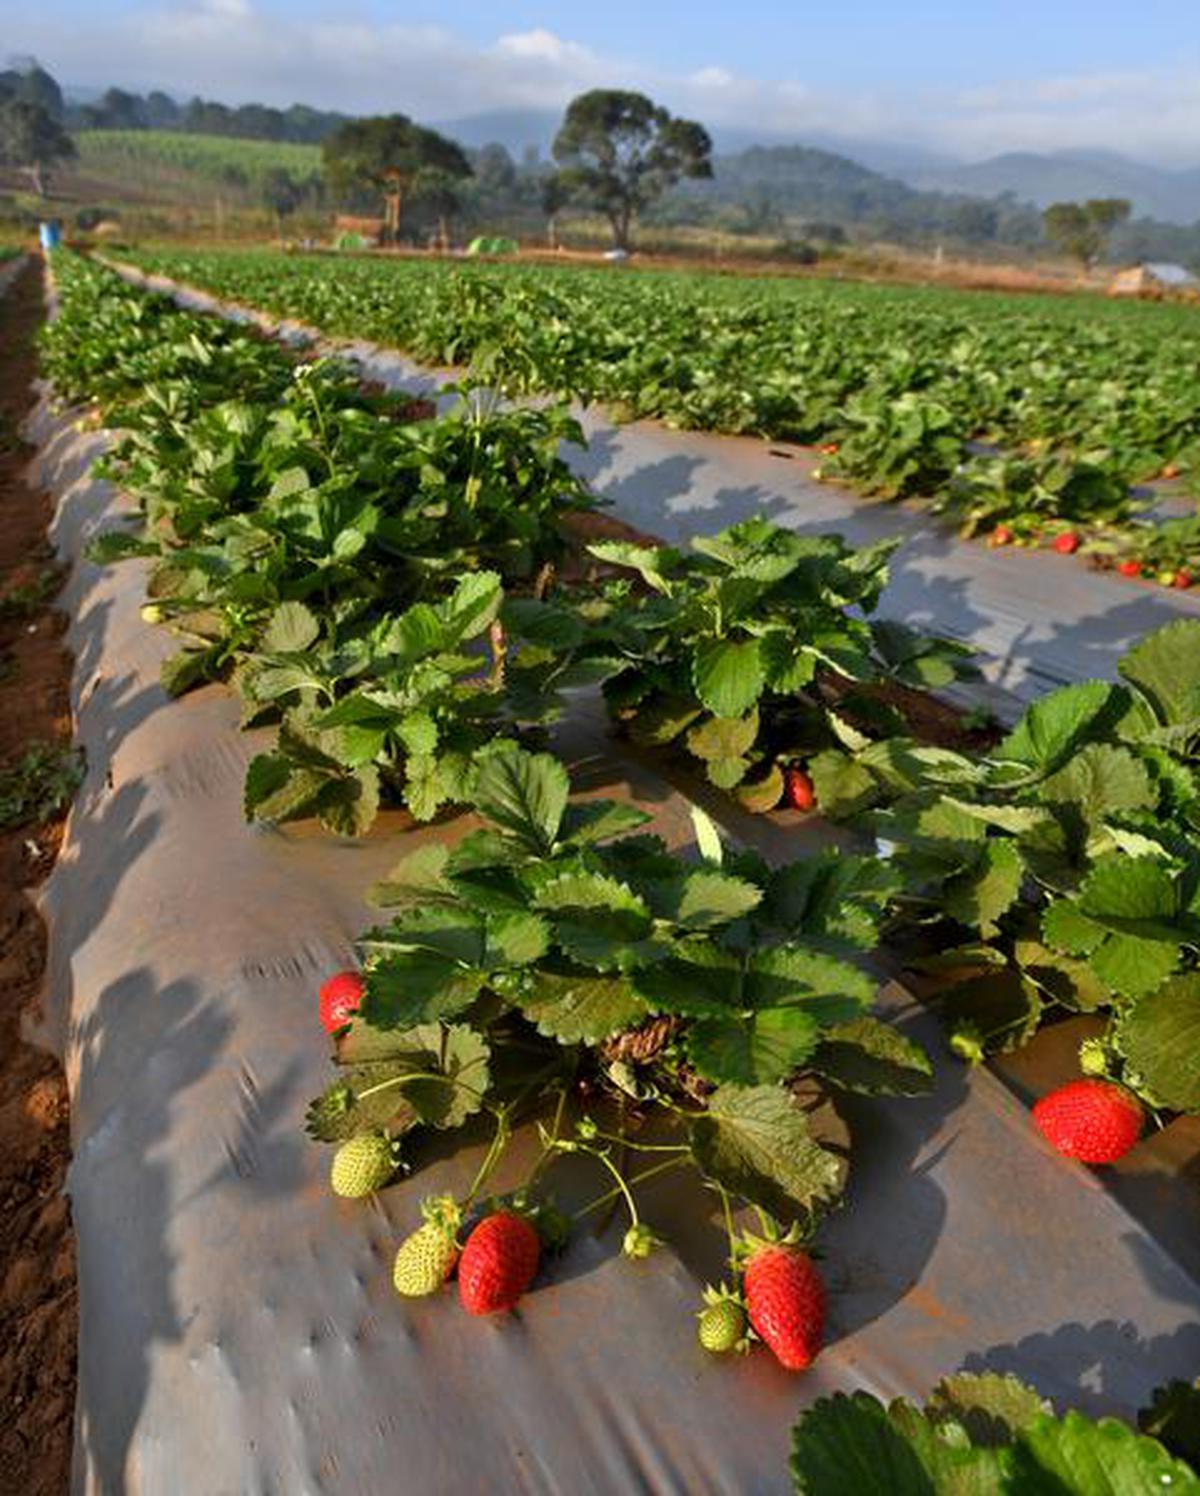 Go strawberry picking at Visakhapatnam’s Lambasingi village this winter and discover some new varieties